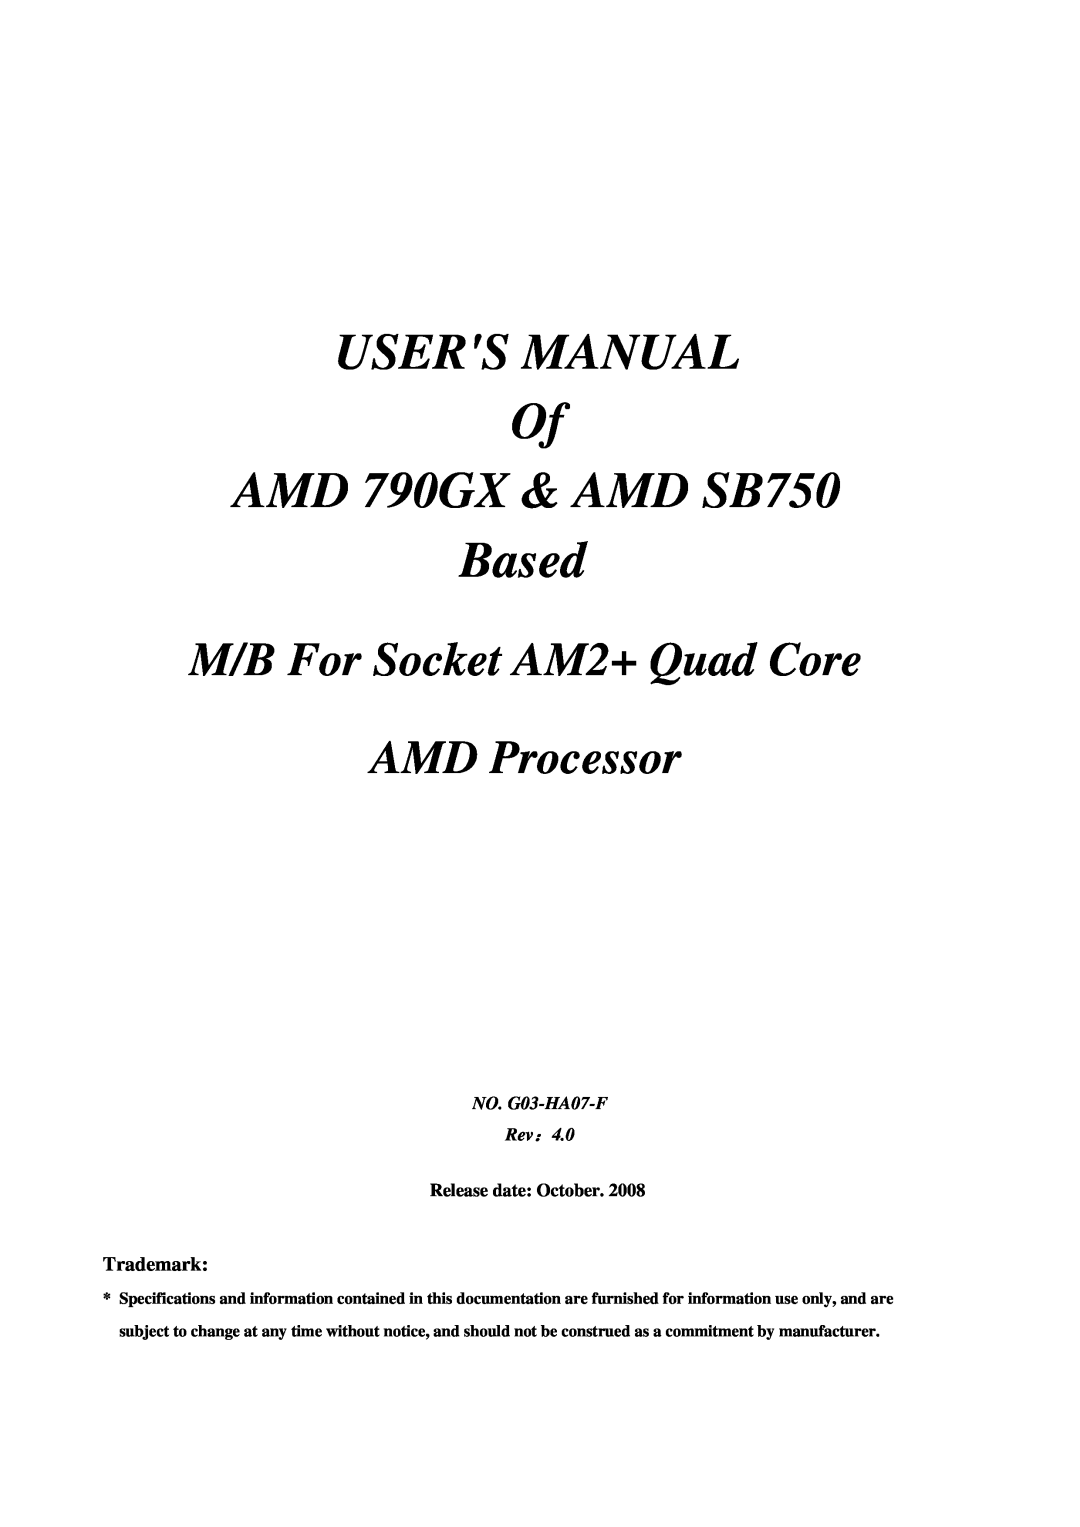 AMD user manual USERS MANUAL Of AMD 790GX & AMD SB750 Based, M/B For Socket AM2+ Quad Core AMD Processor, Trademark 